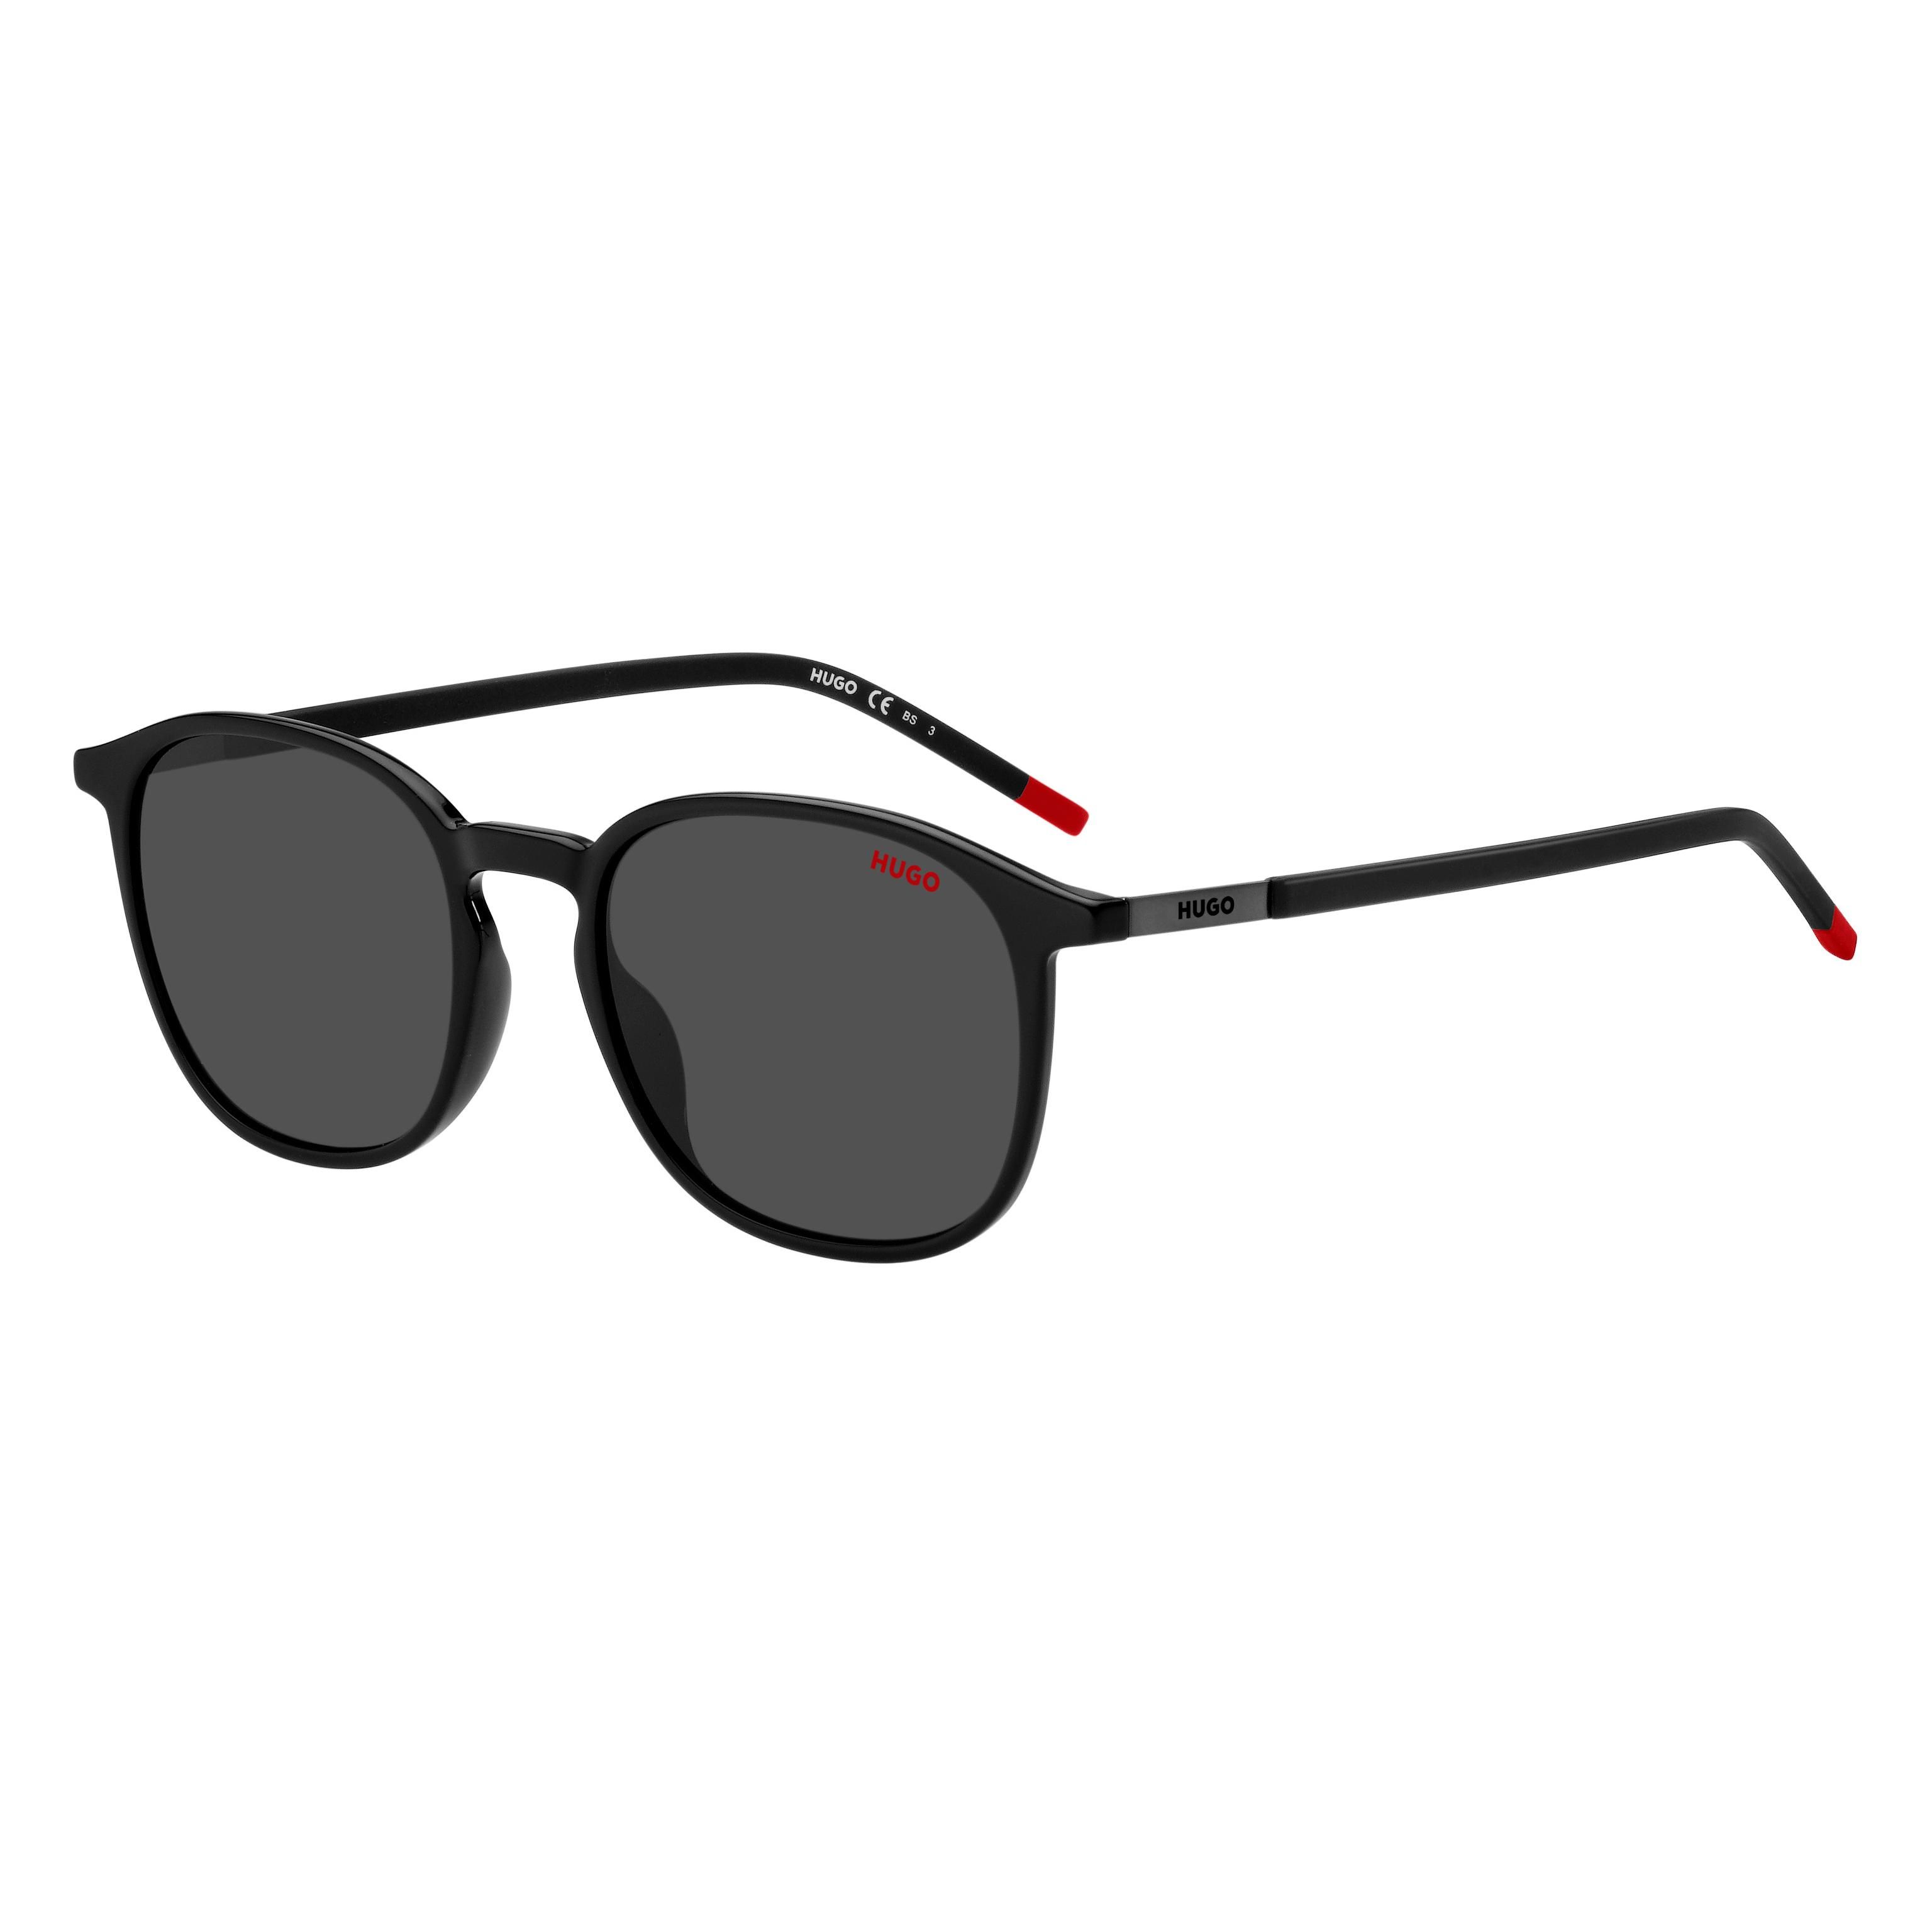 HG 1229 S Round Sunglasses 807 - size 52